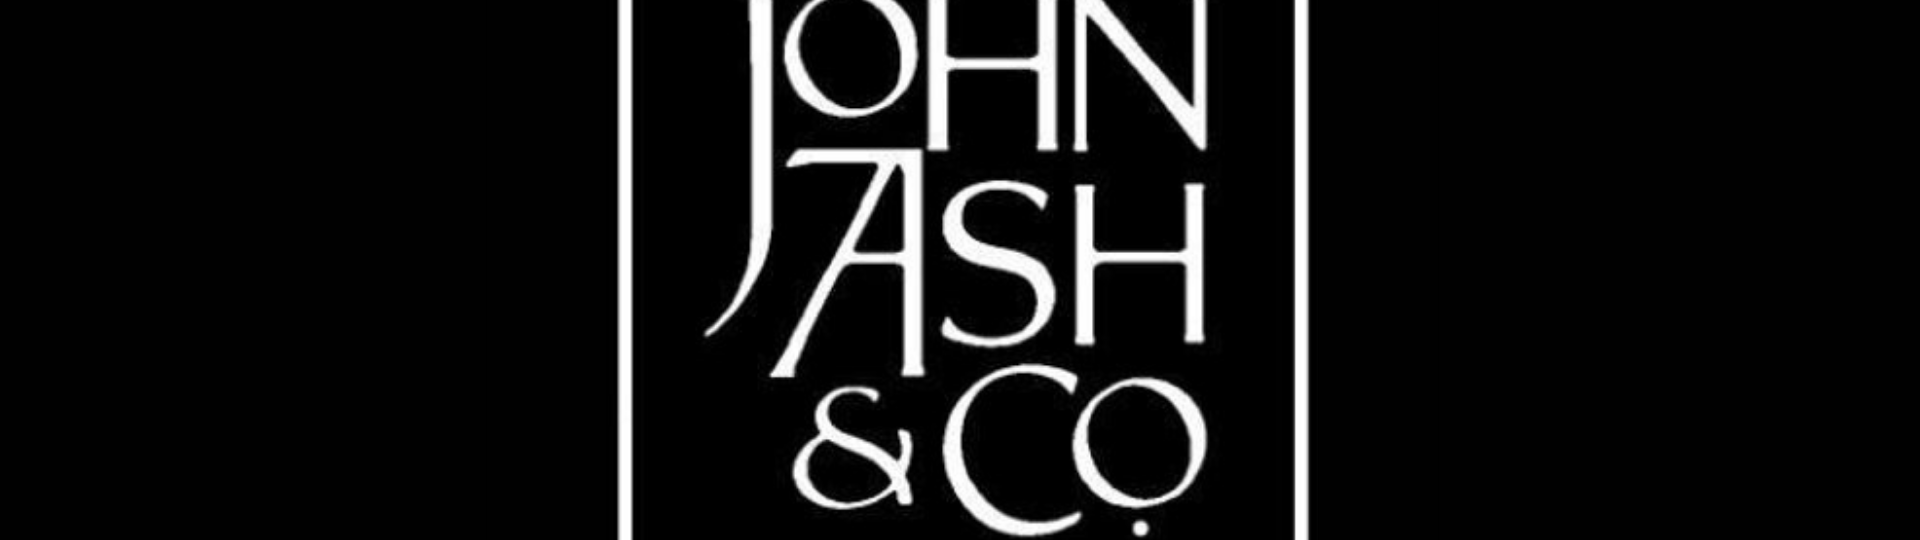 John Ash and Co logo